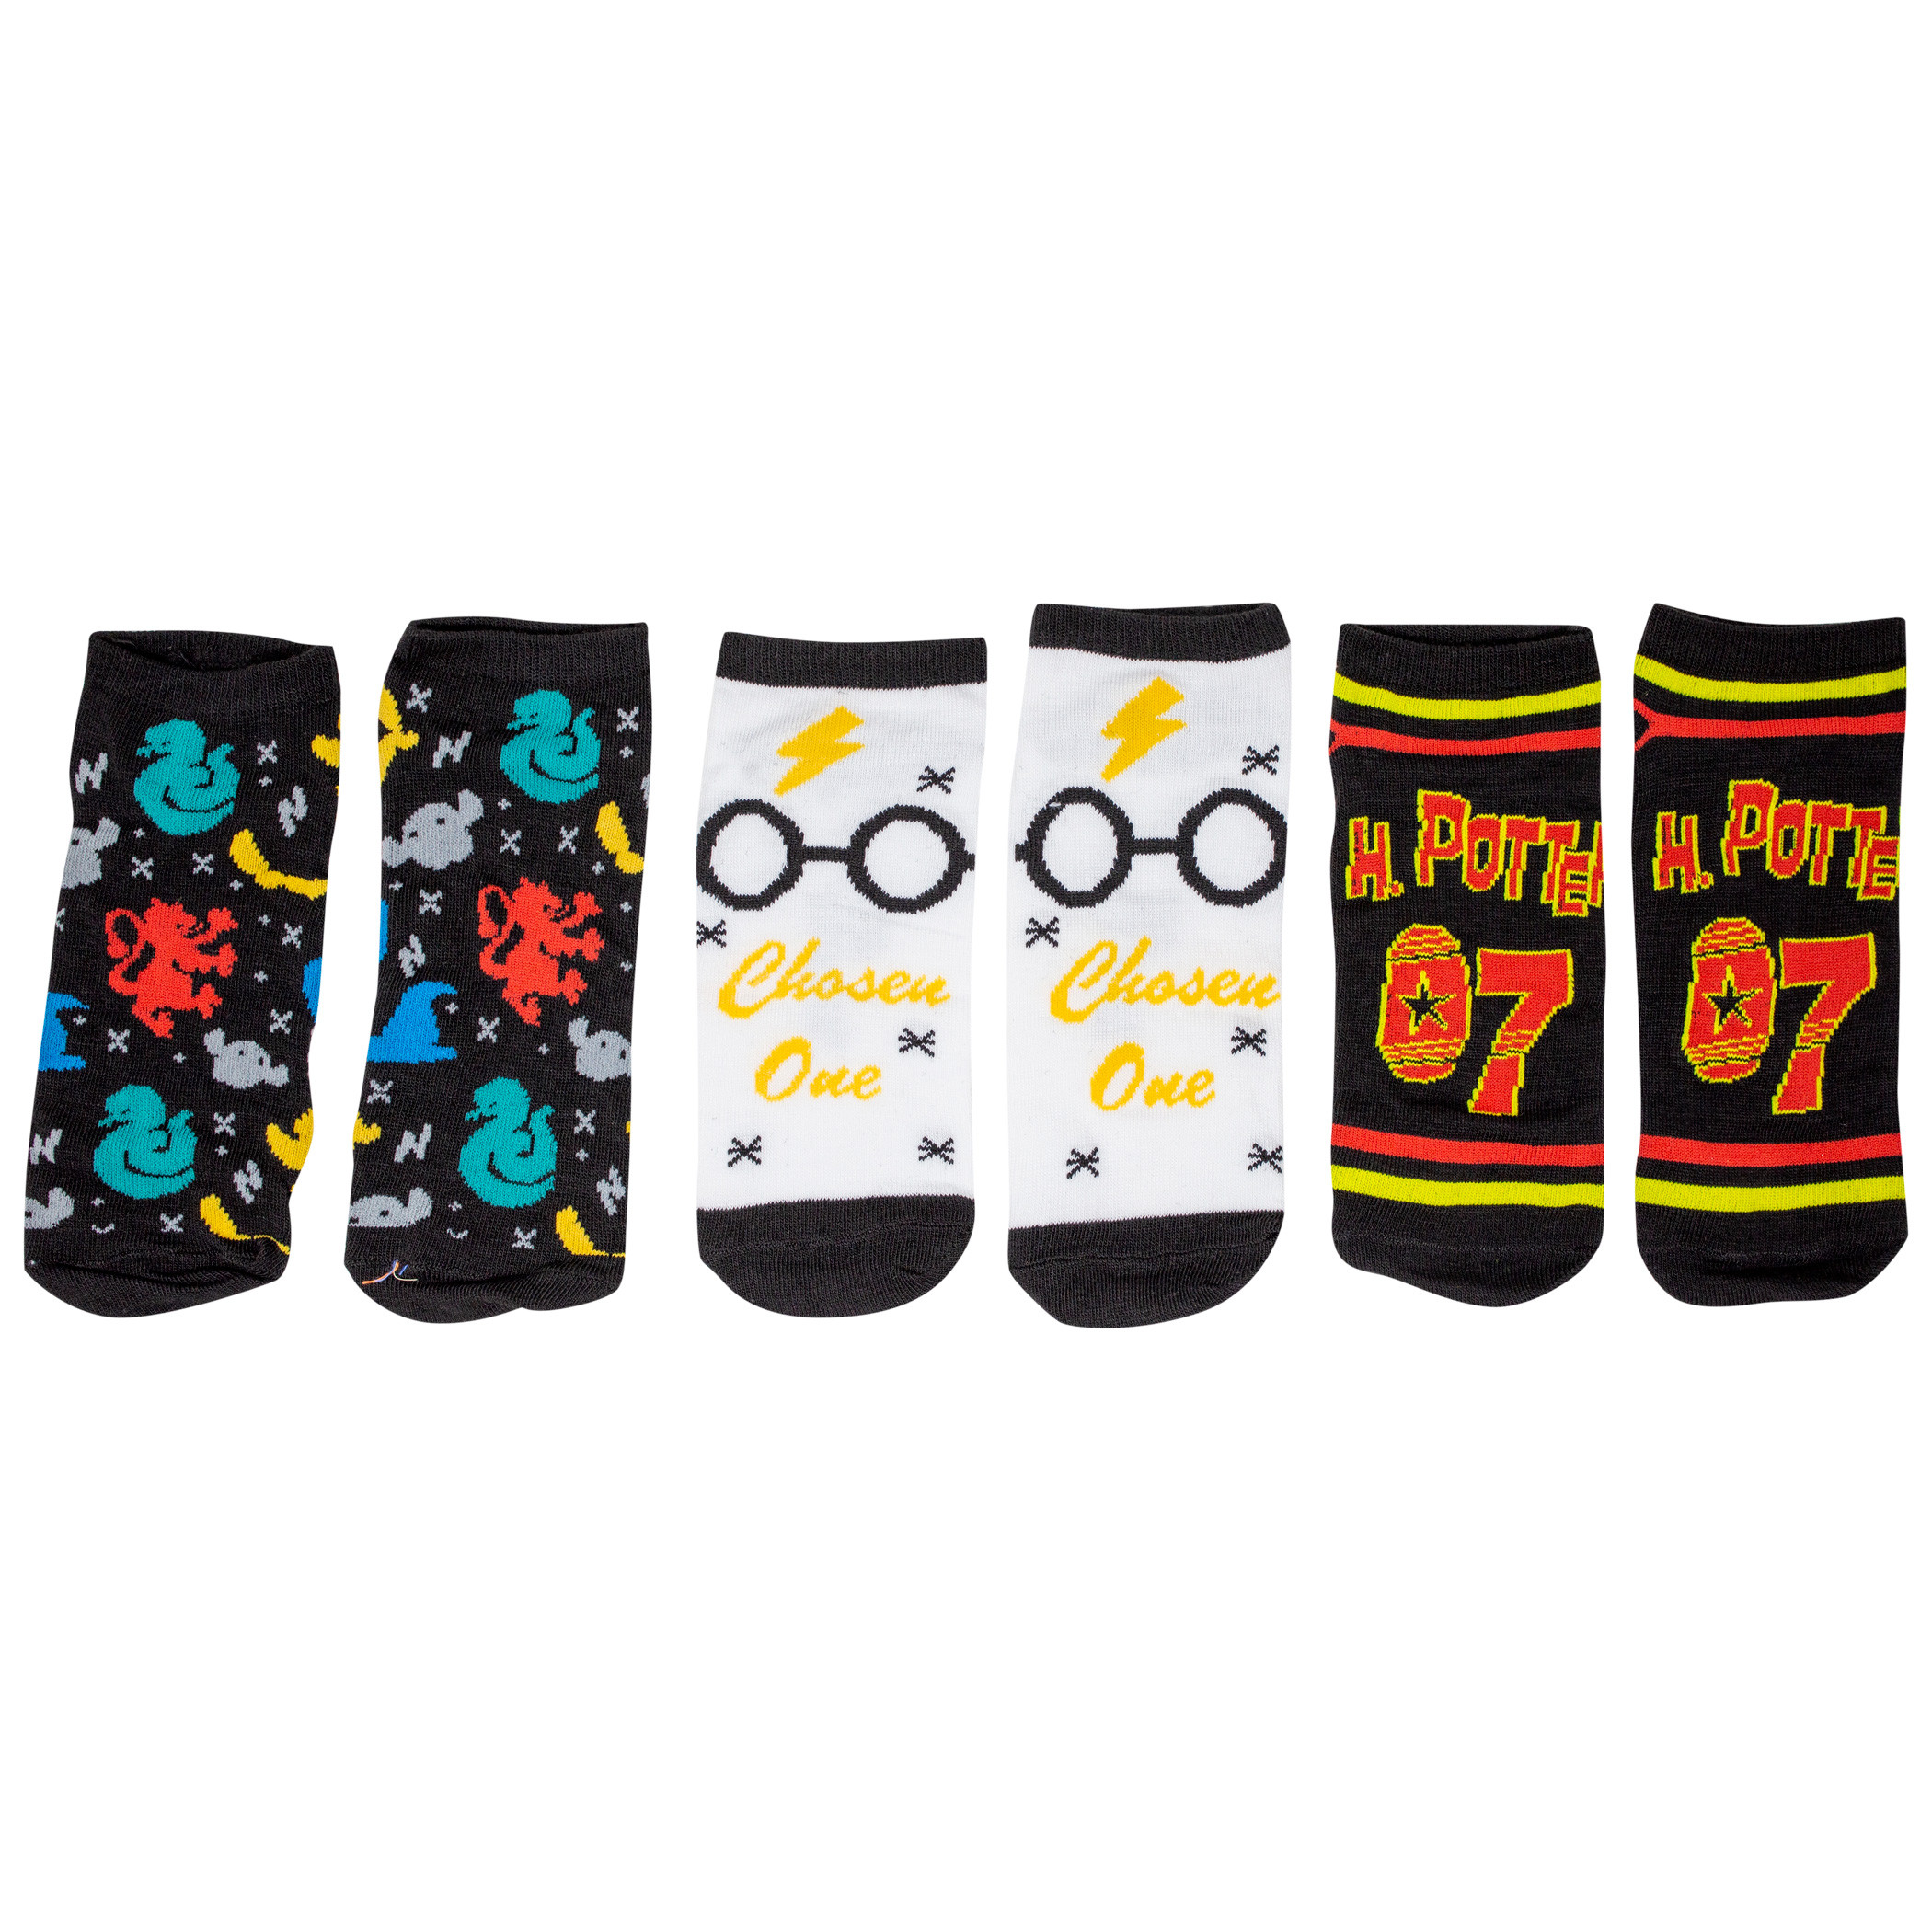 Harry Potter Chibi Sock of the Week Assorted Women's Shorties Socks 7-Pair Box Set